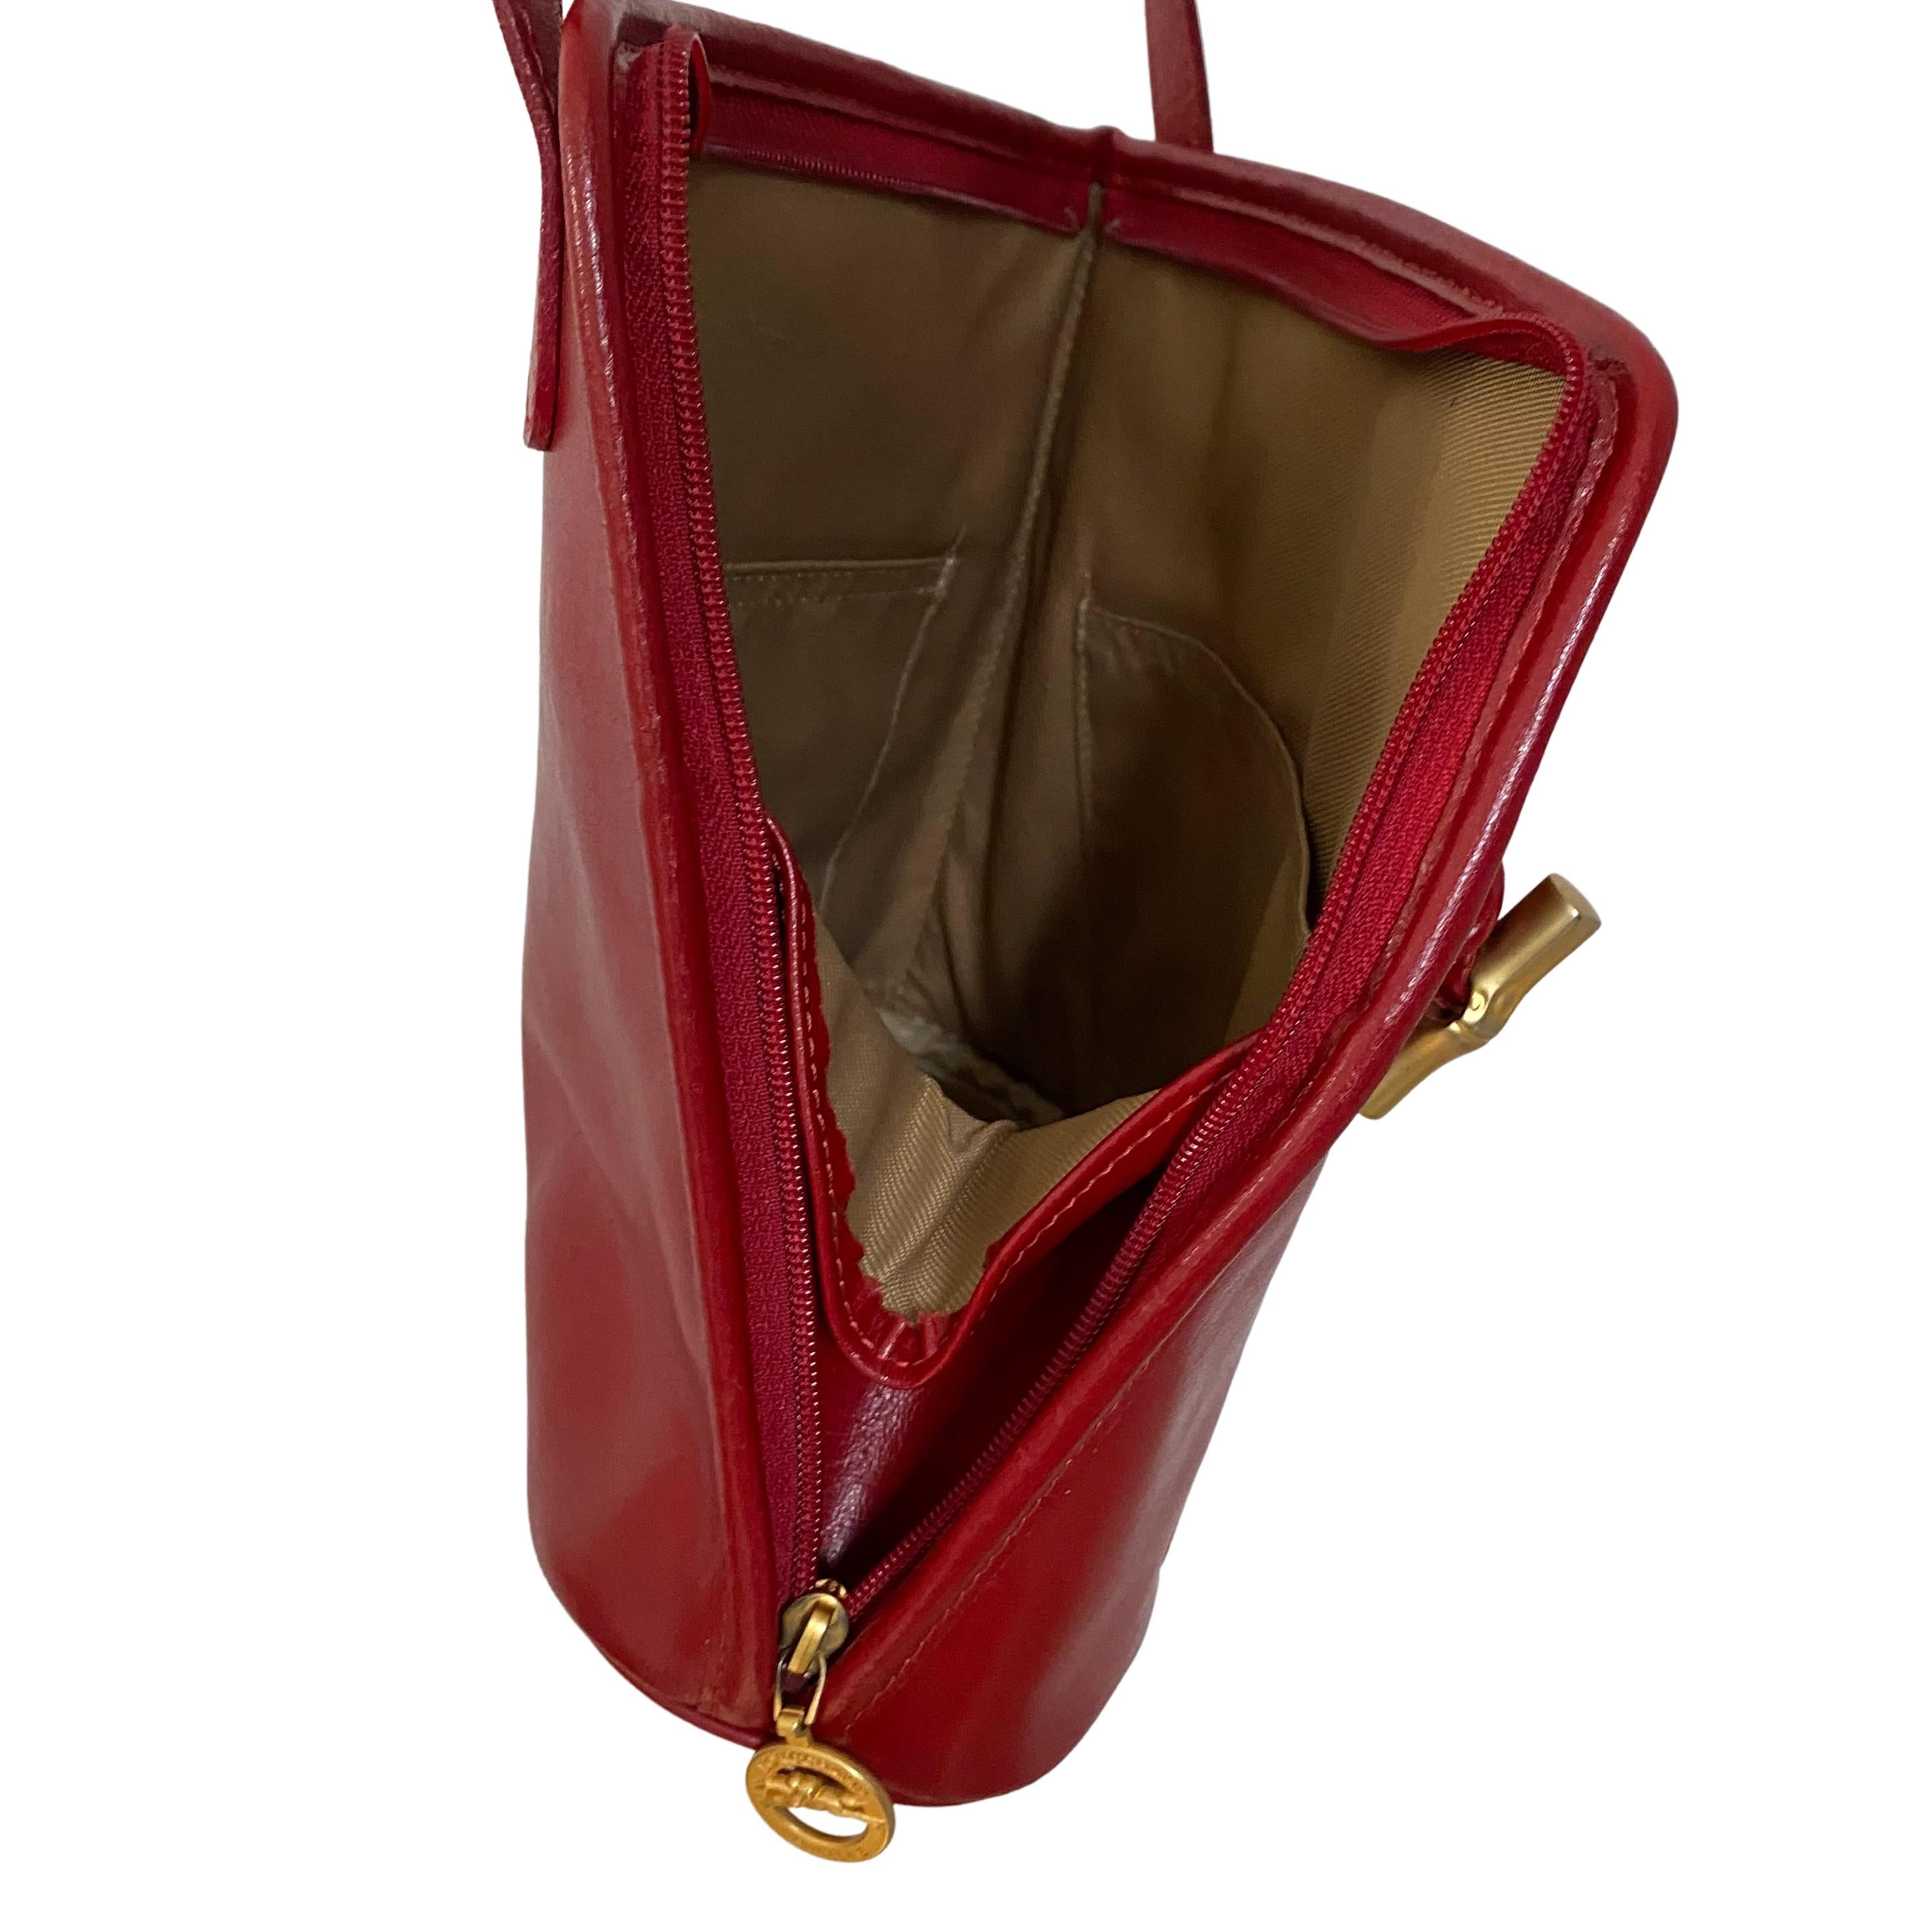 Brown LONGCHAMP Paris Vintage Red Leather Crossbody Asymmetrical foldover Bag